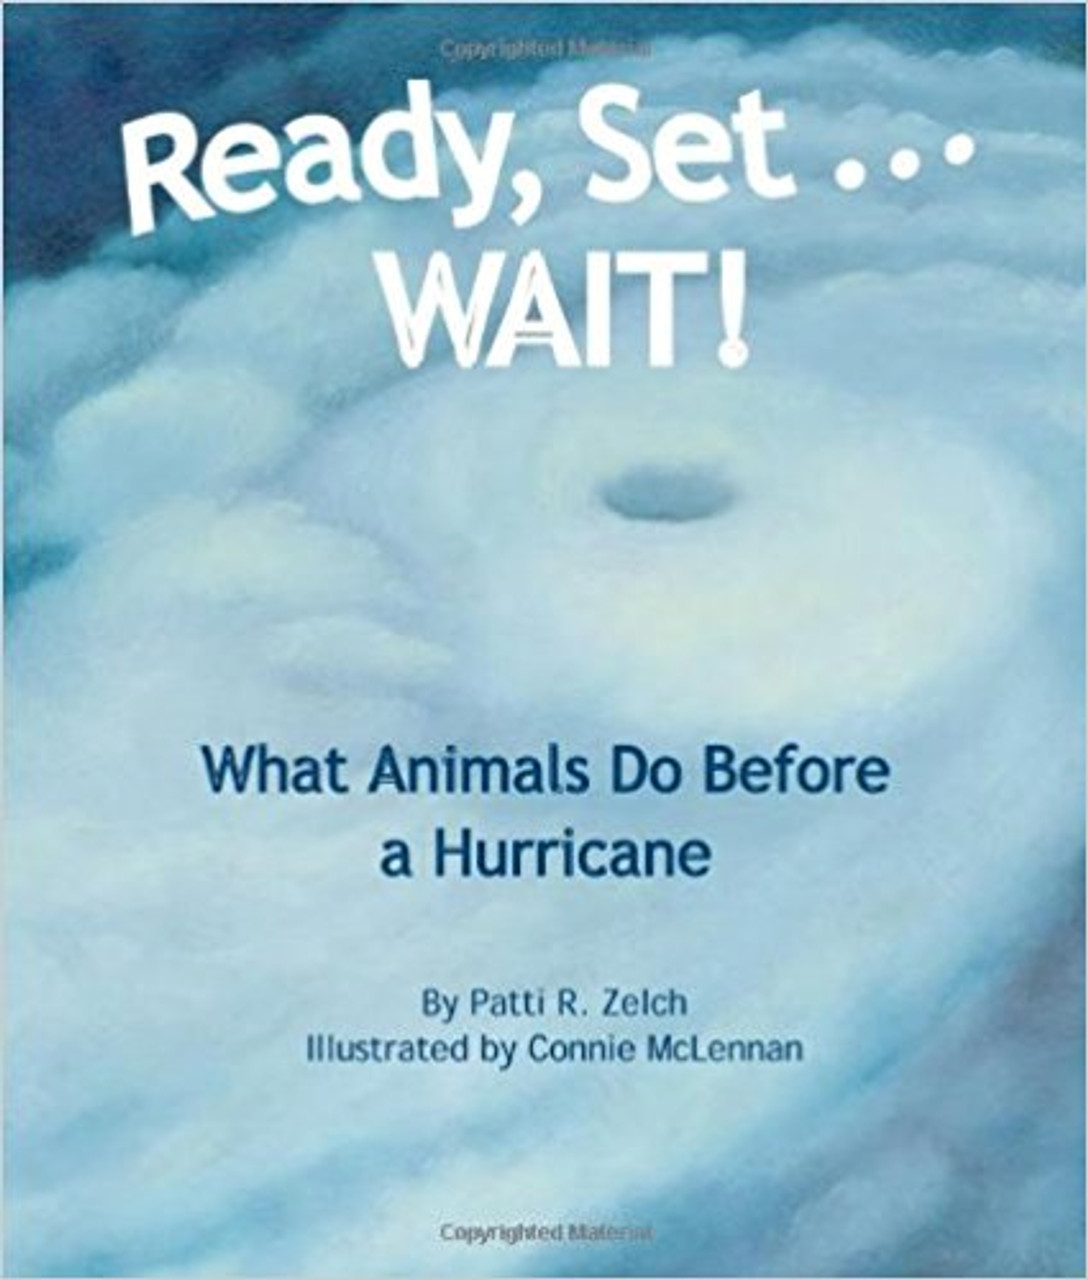 Ready, Set...WAIT! by Patti R. Zelch